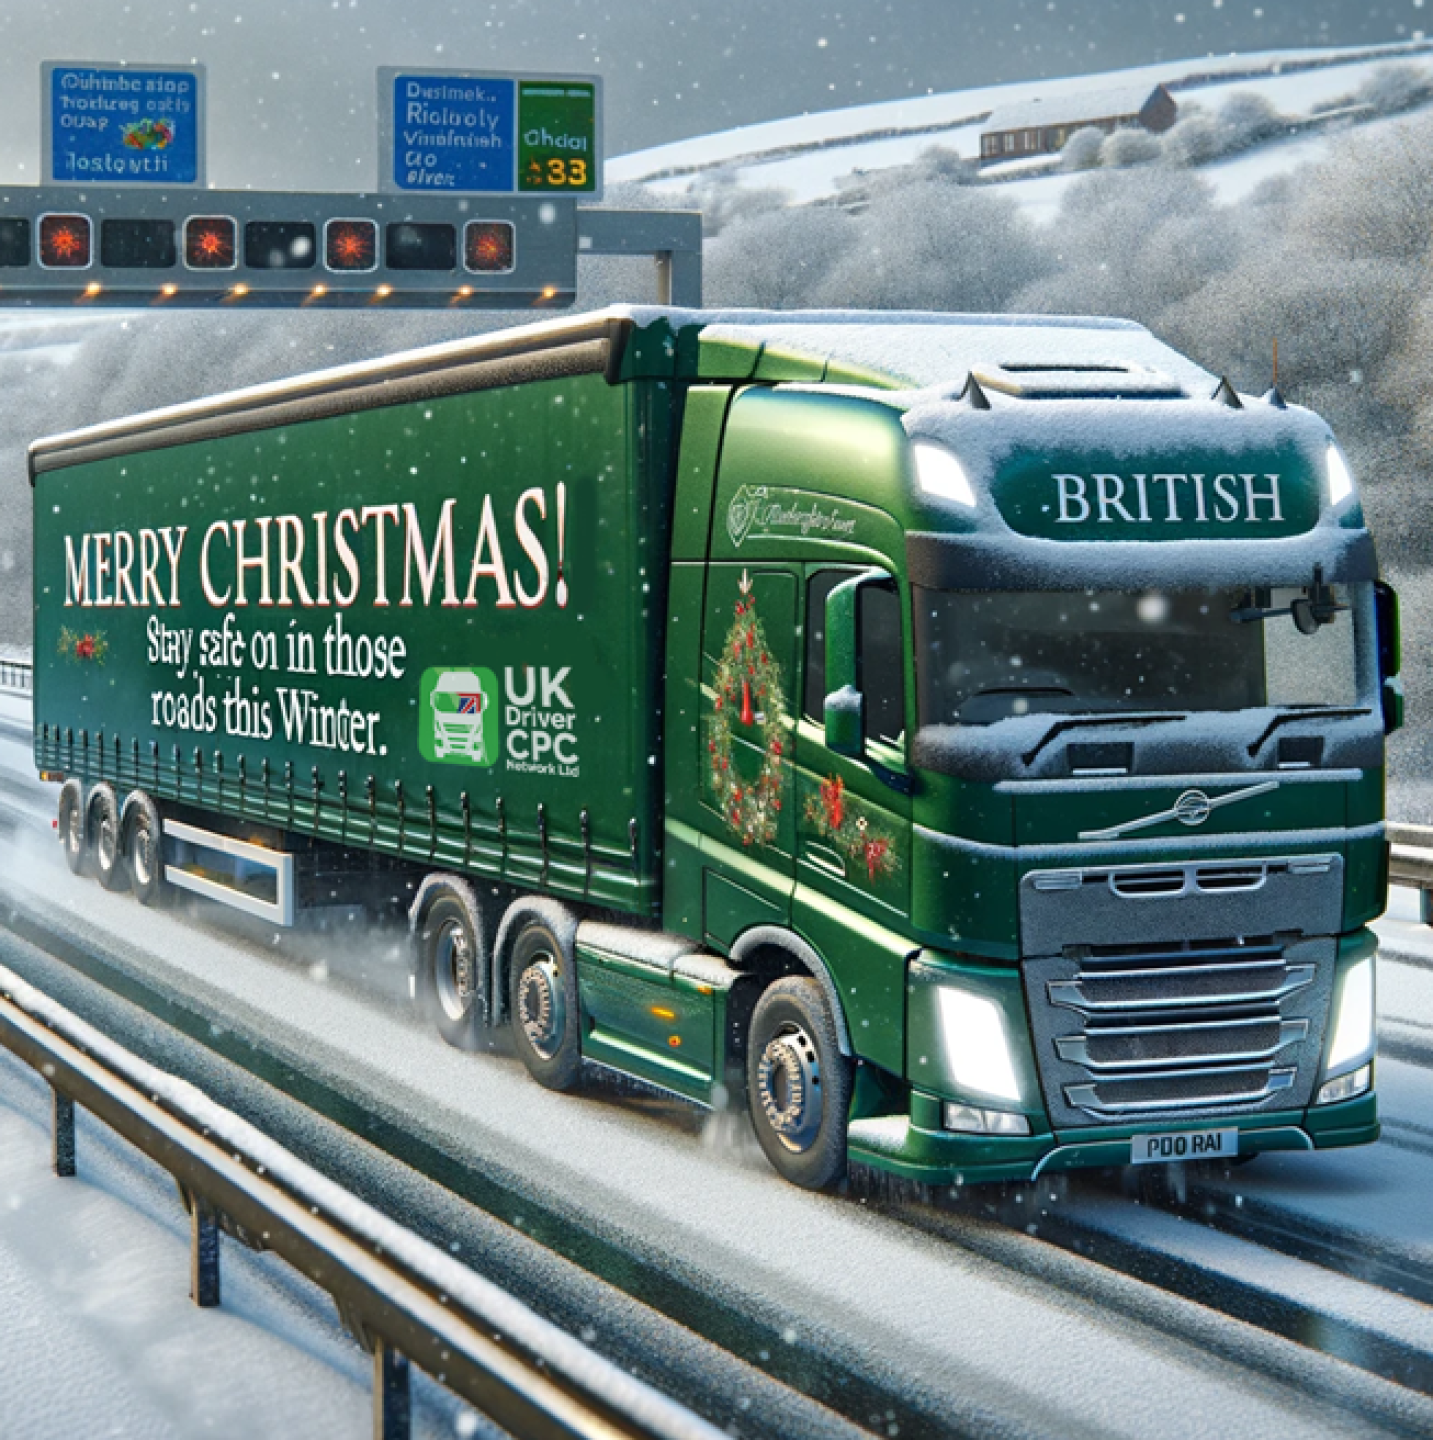 Driver CPC Image 9 - Merry Christmas